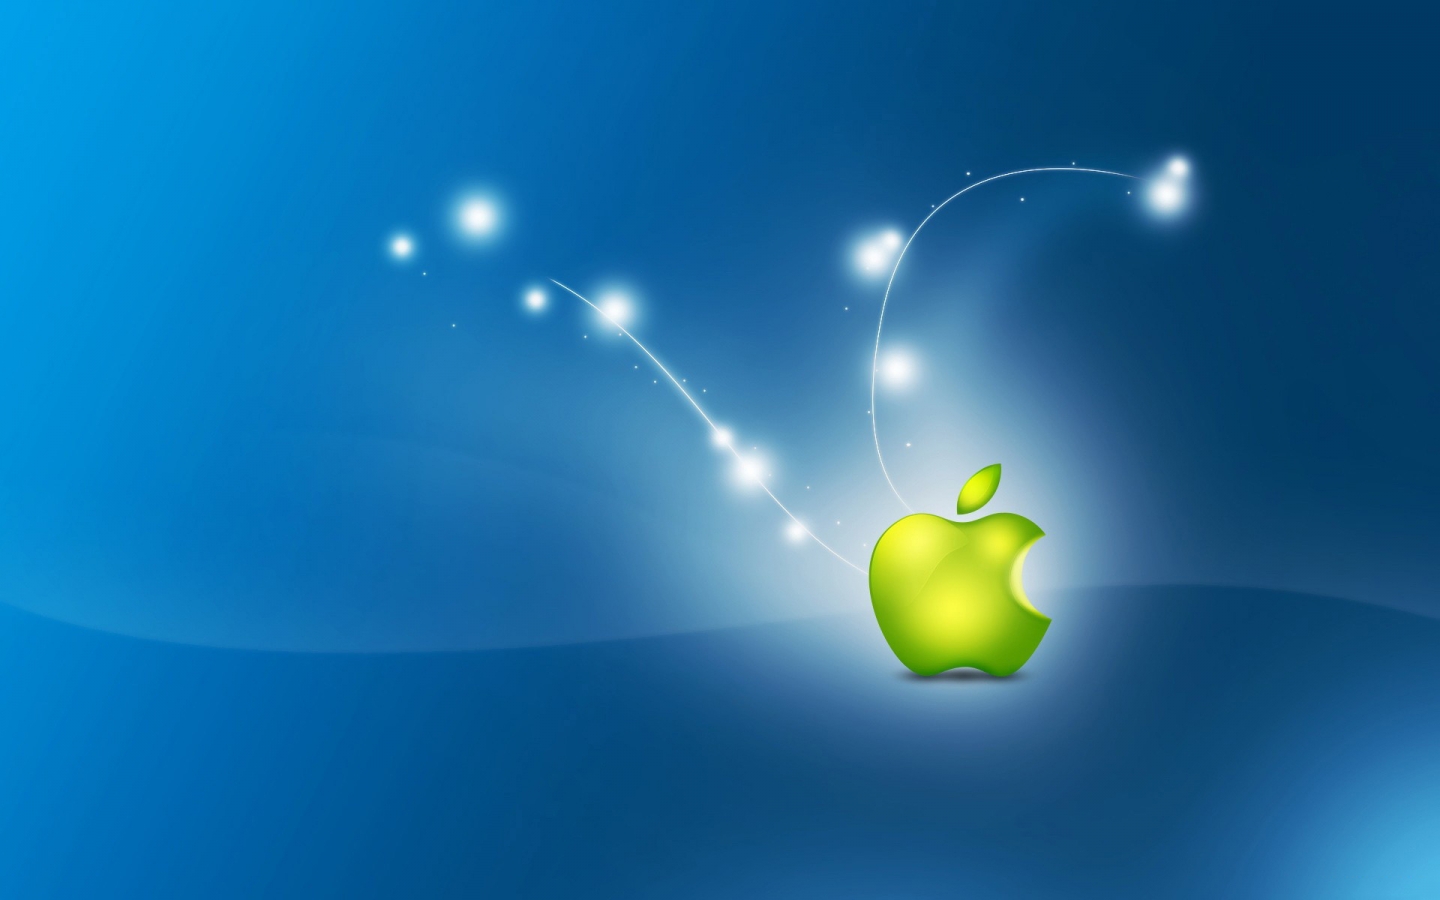 Artistic Apple Logo for 1440 x 900 widescreen resolution